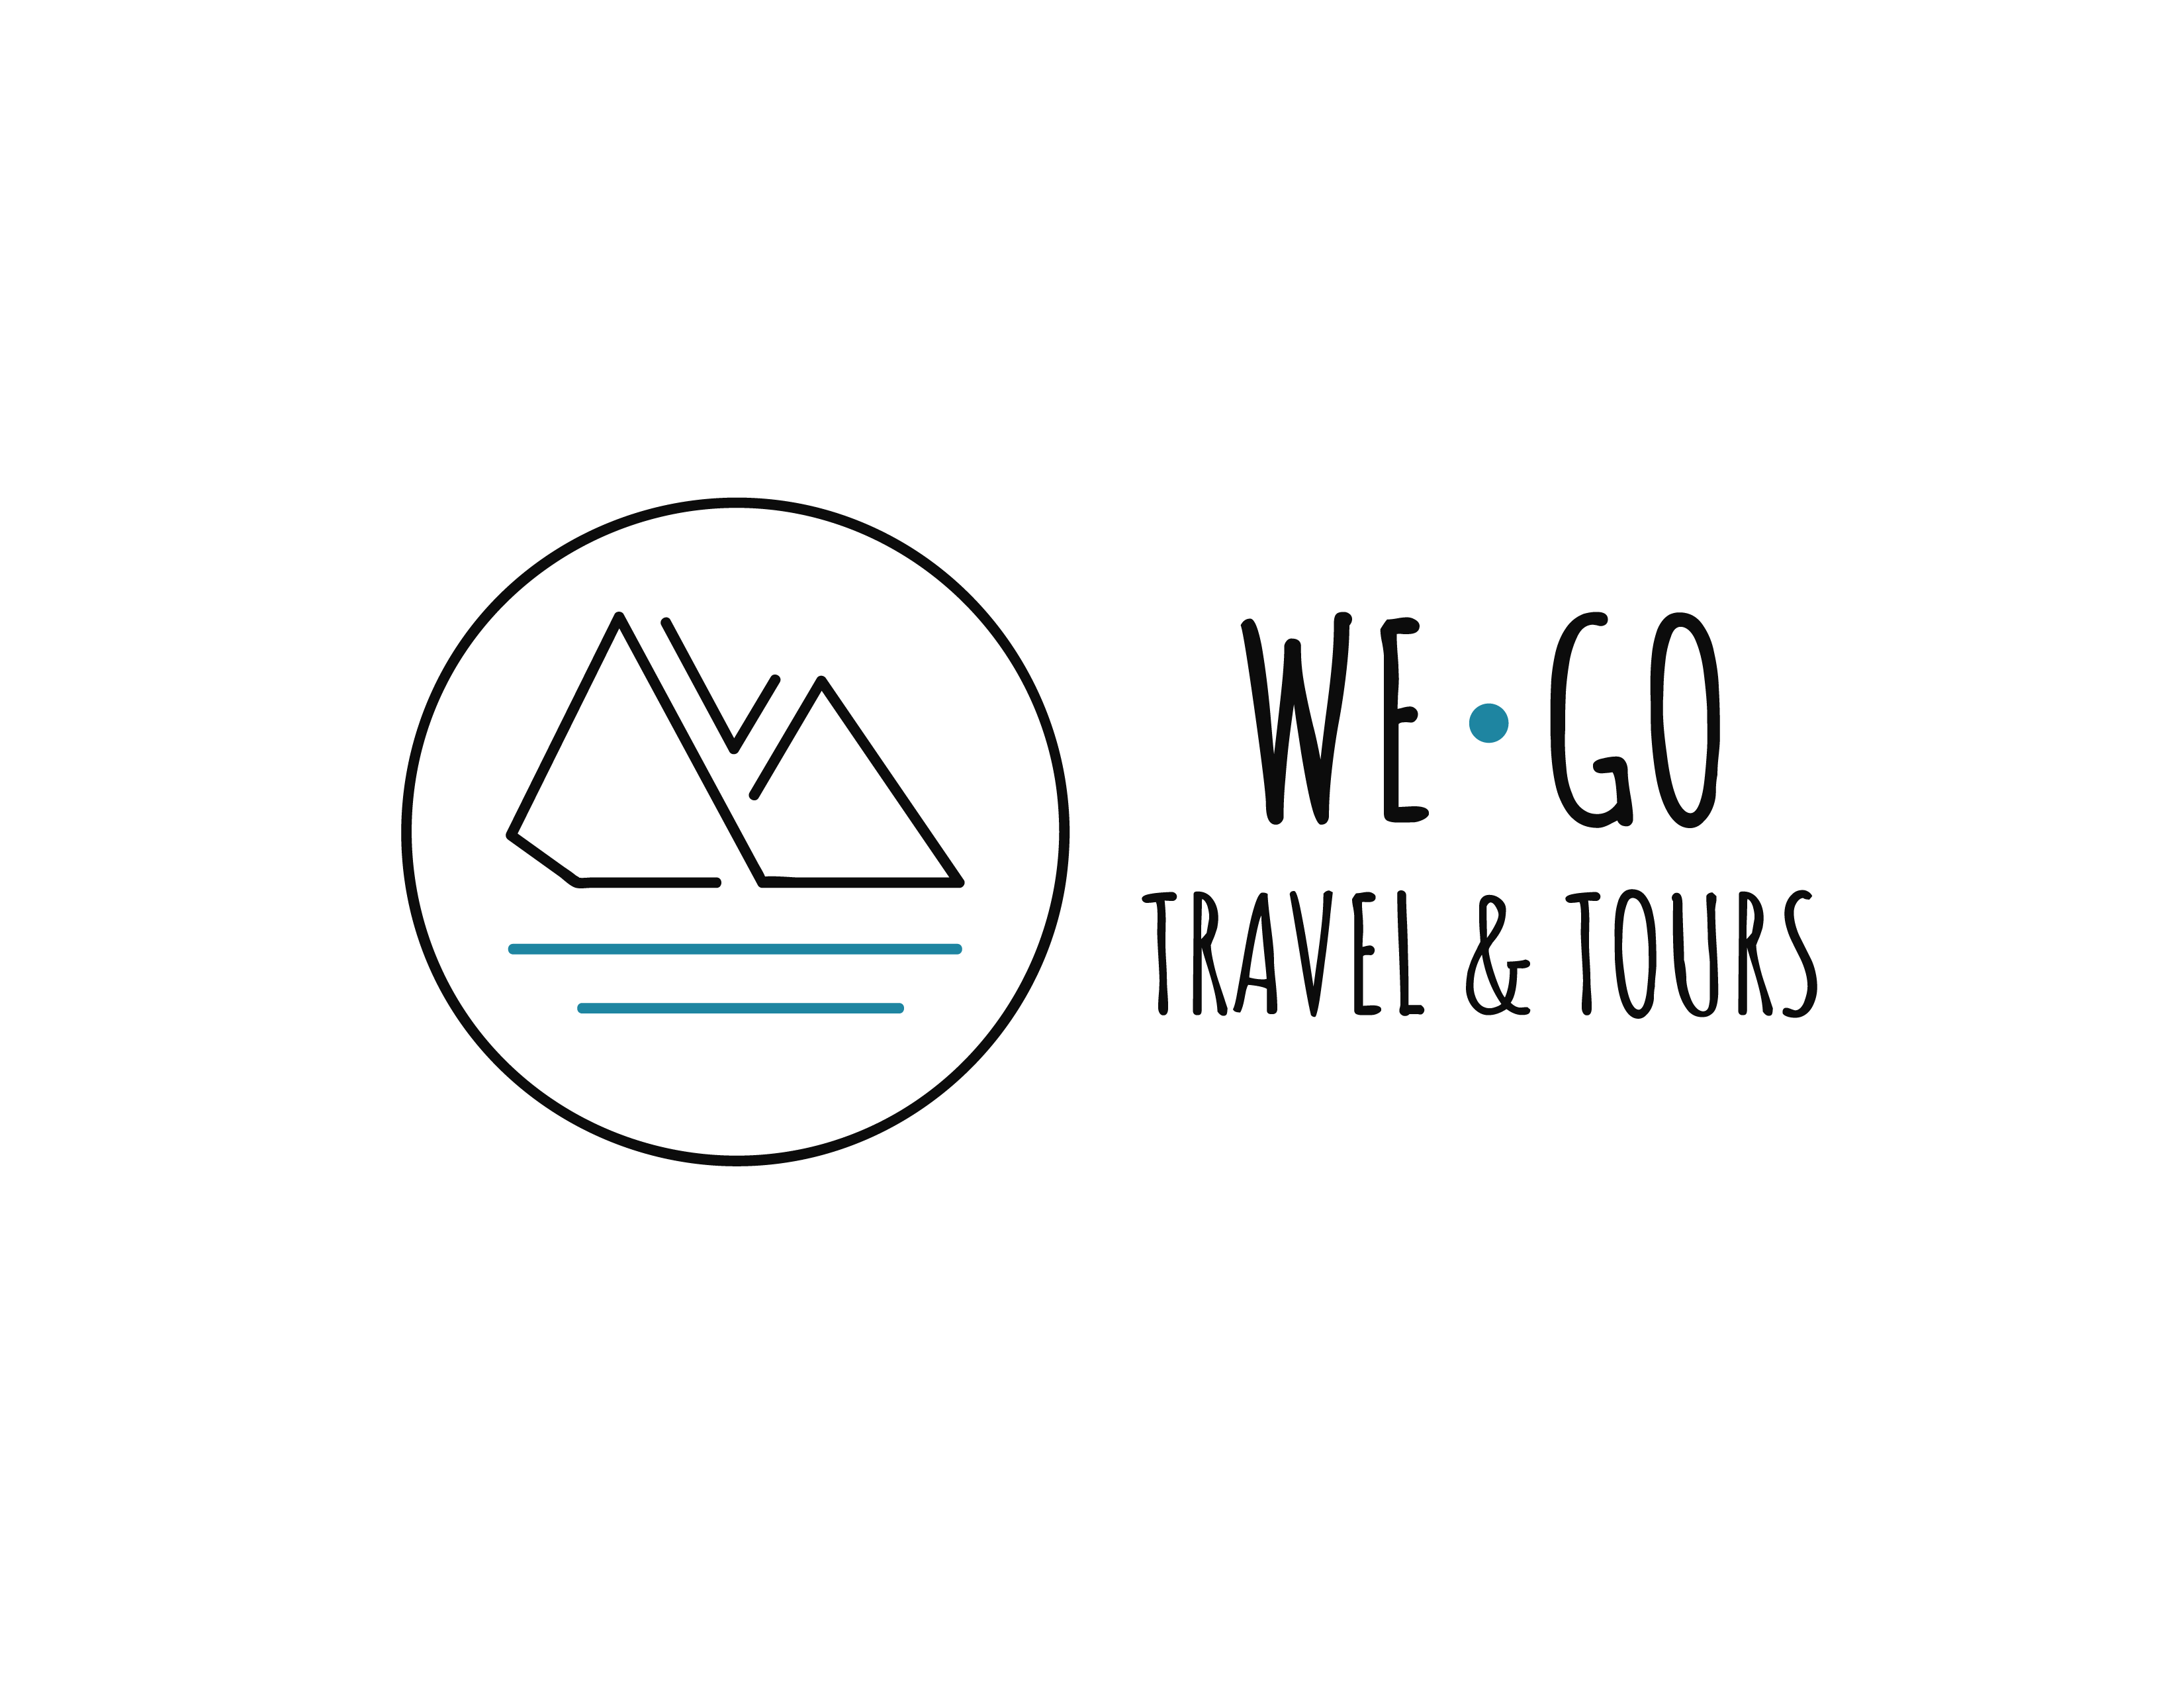 WEGO TRAVEL & TOURS